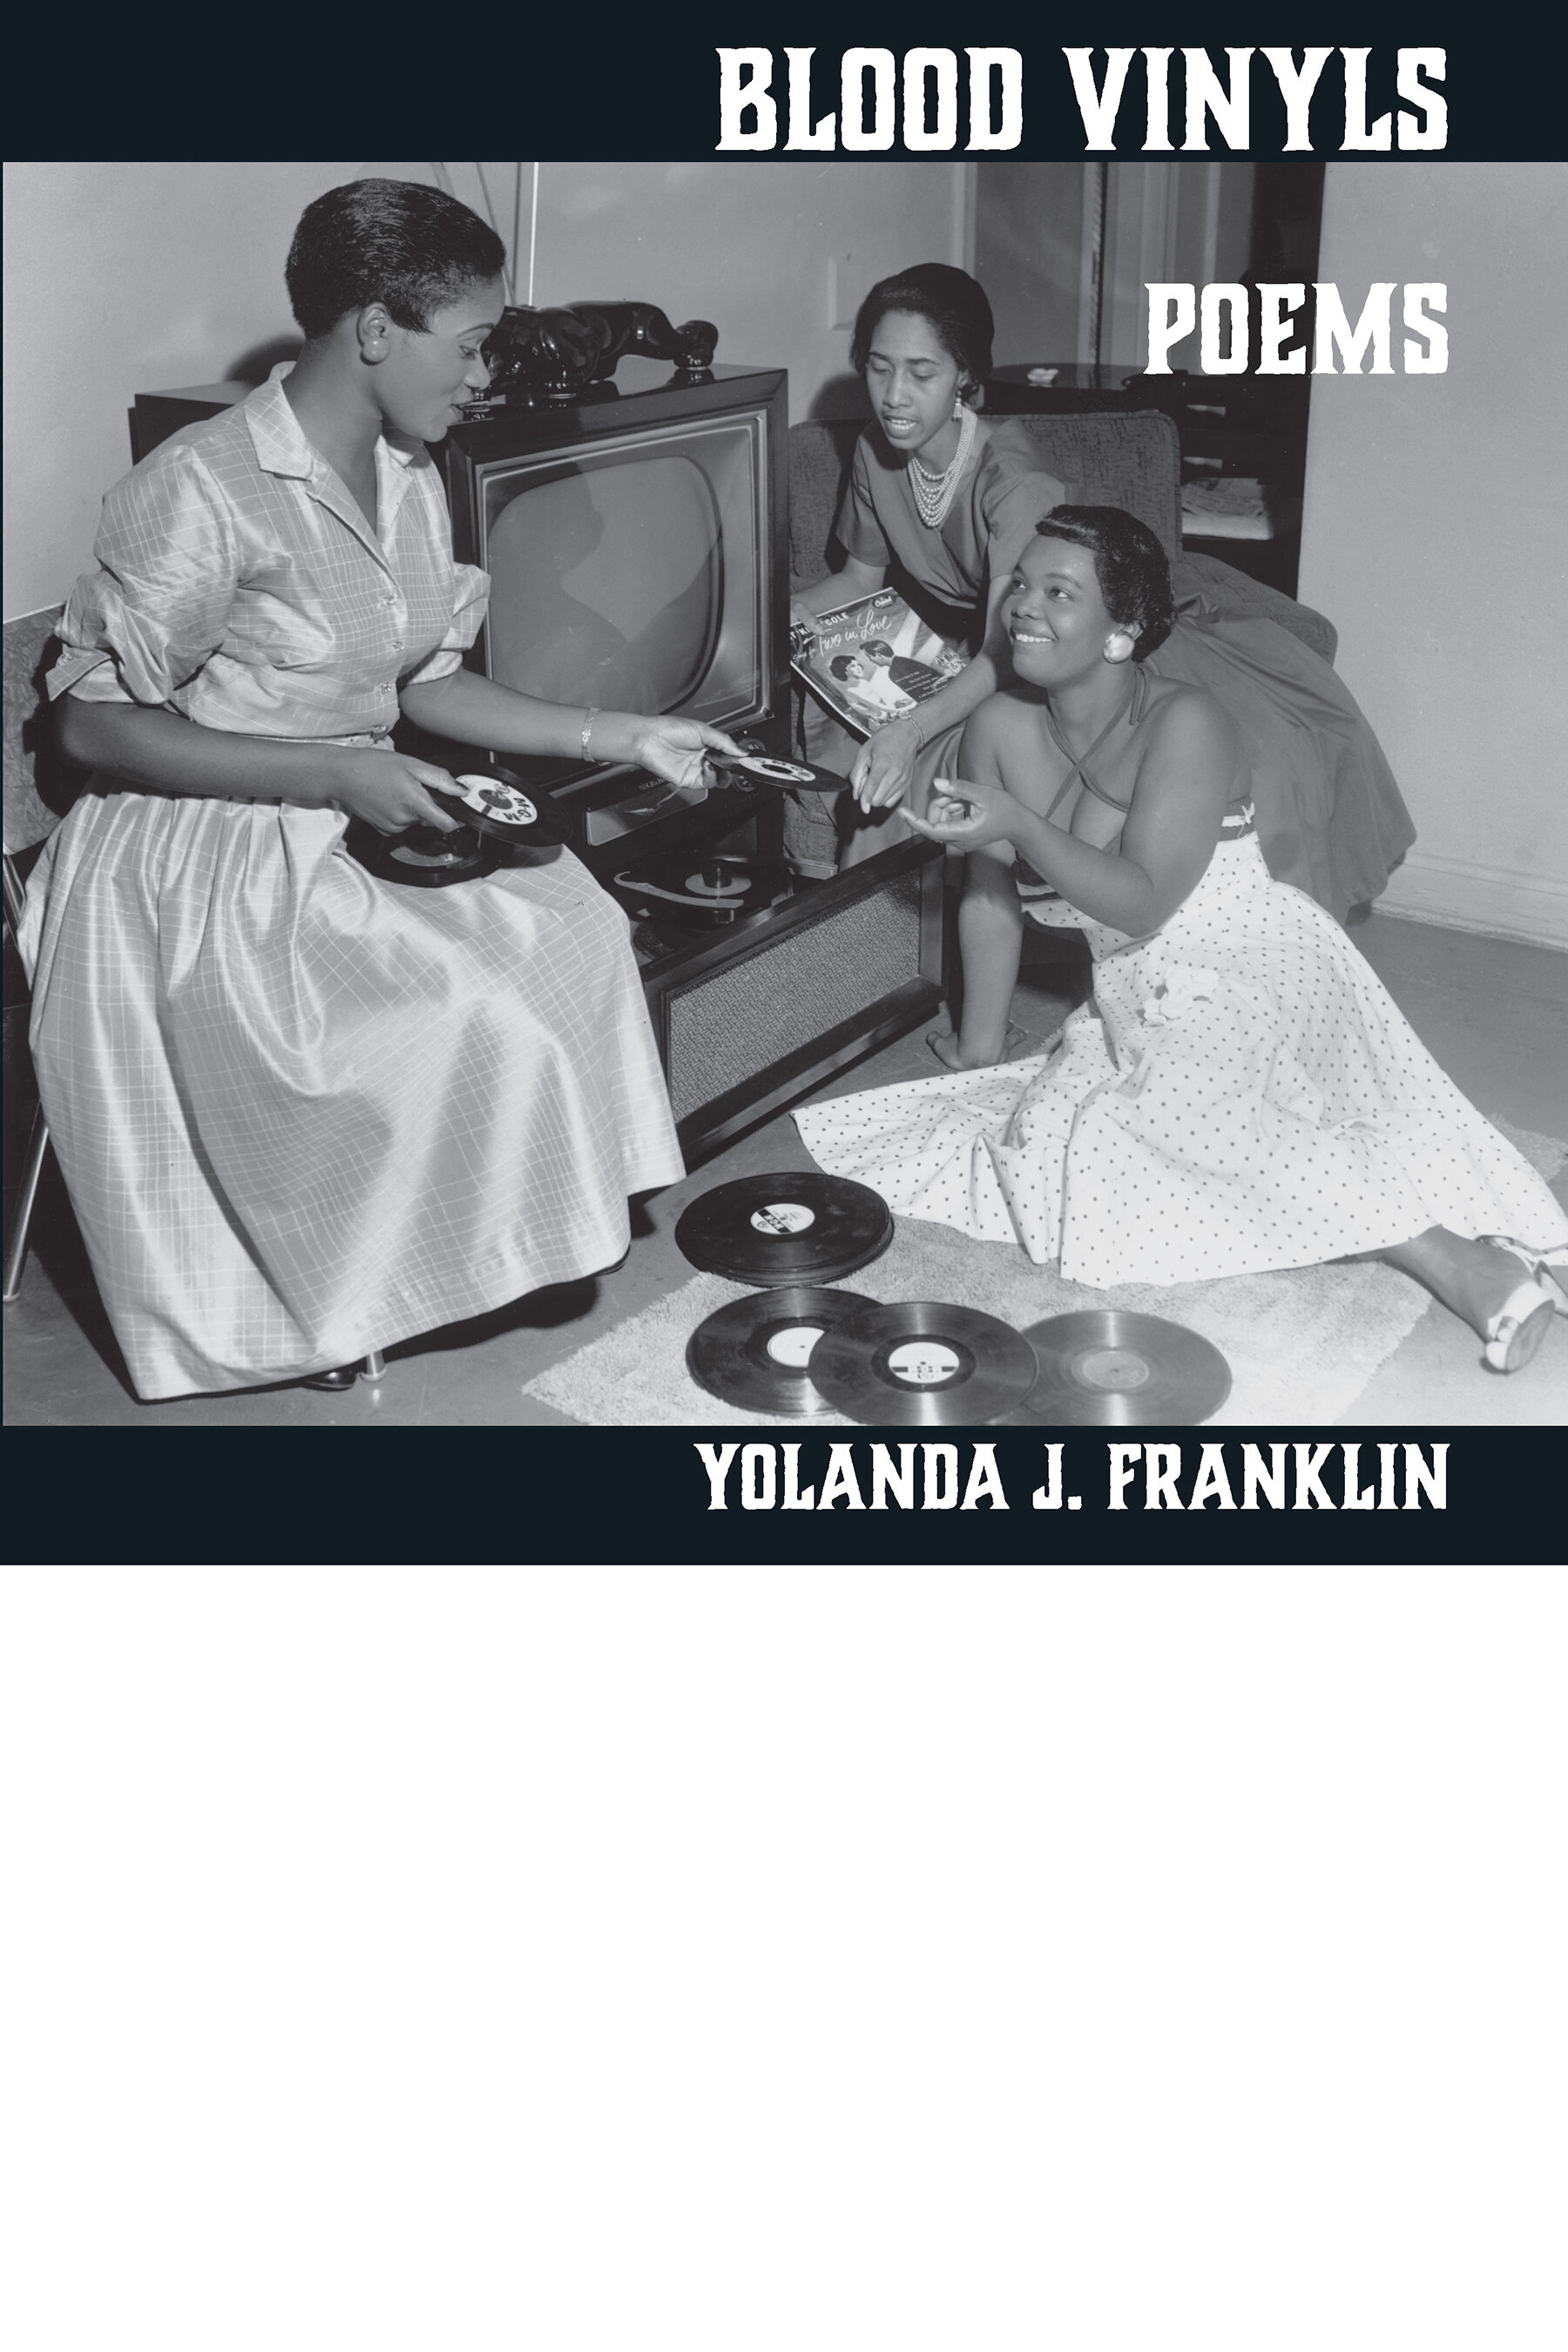 Blood Vinyls by Yolanda J. Franklin — anhinga press